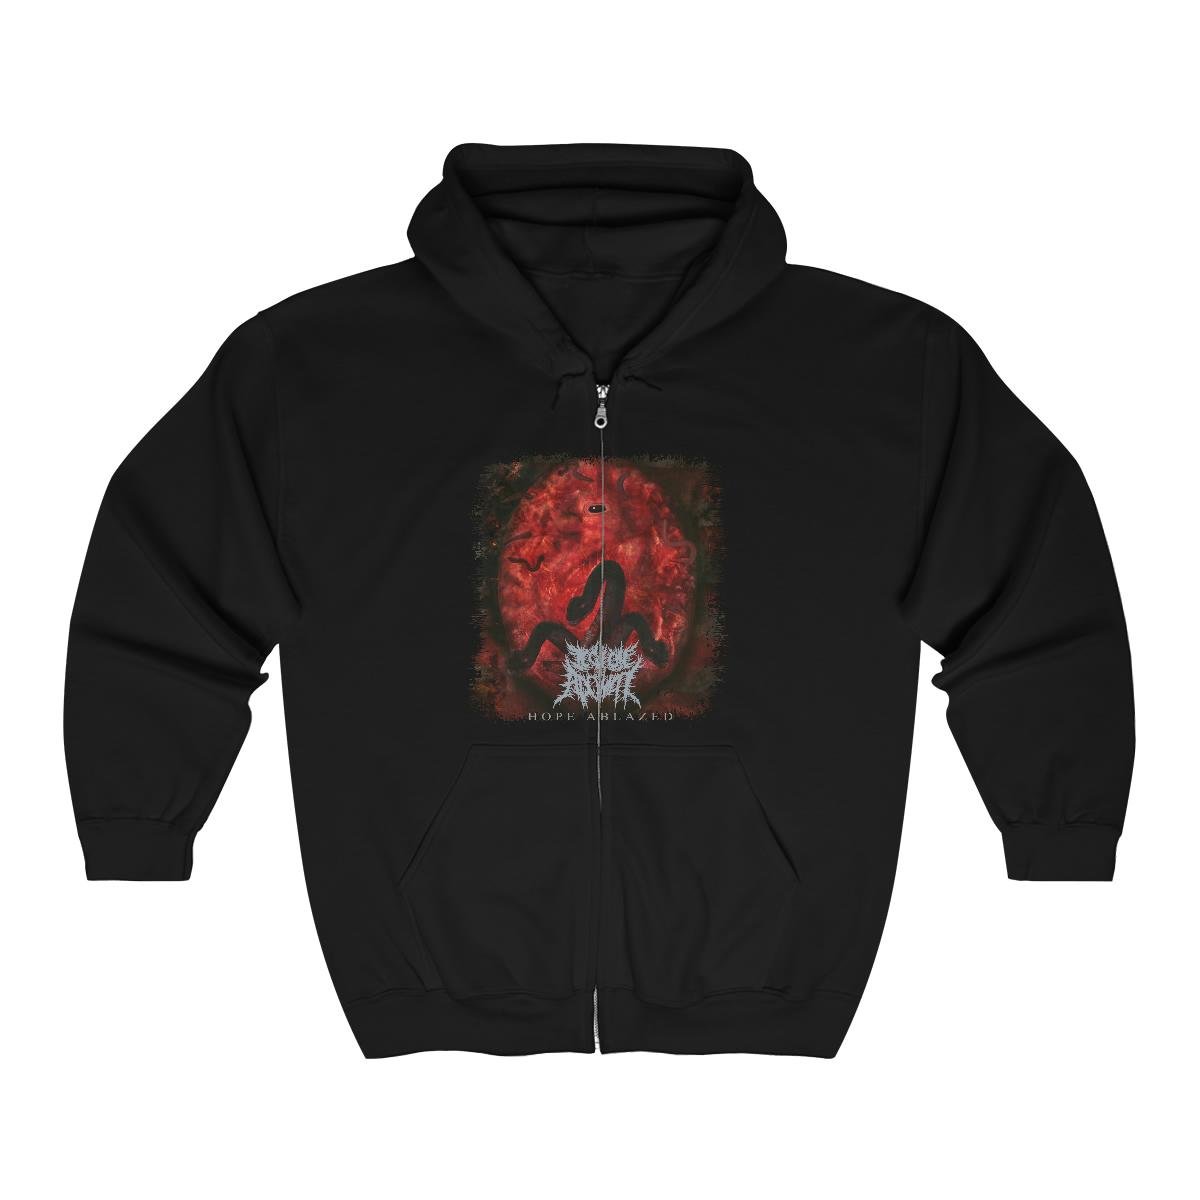 Legion of Adonai – Hope Ablazed Full Zip Hooded Sweatshirt